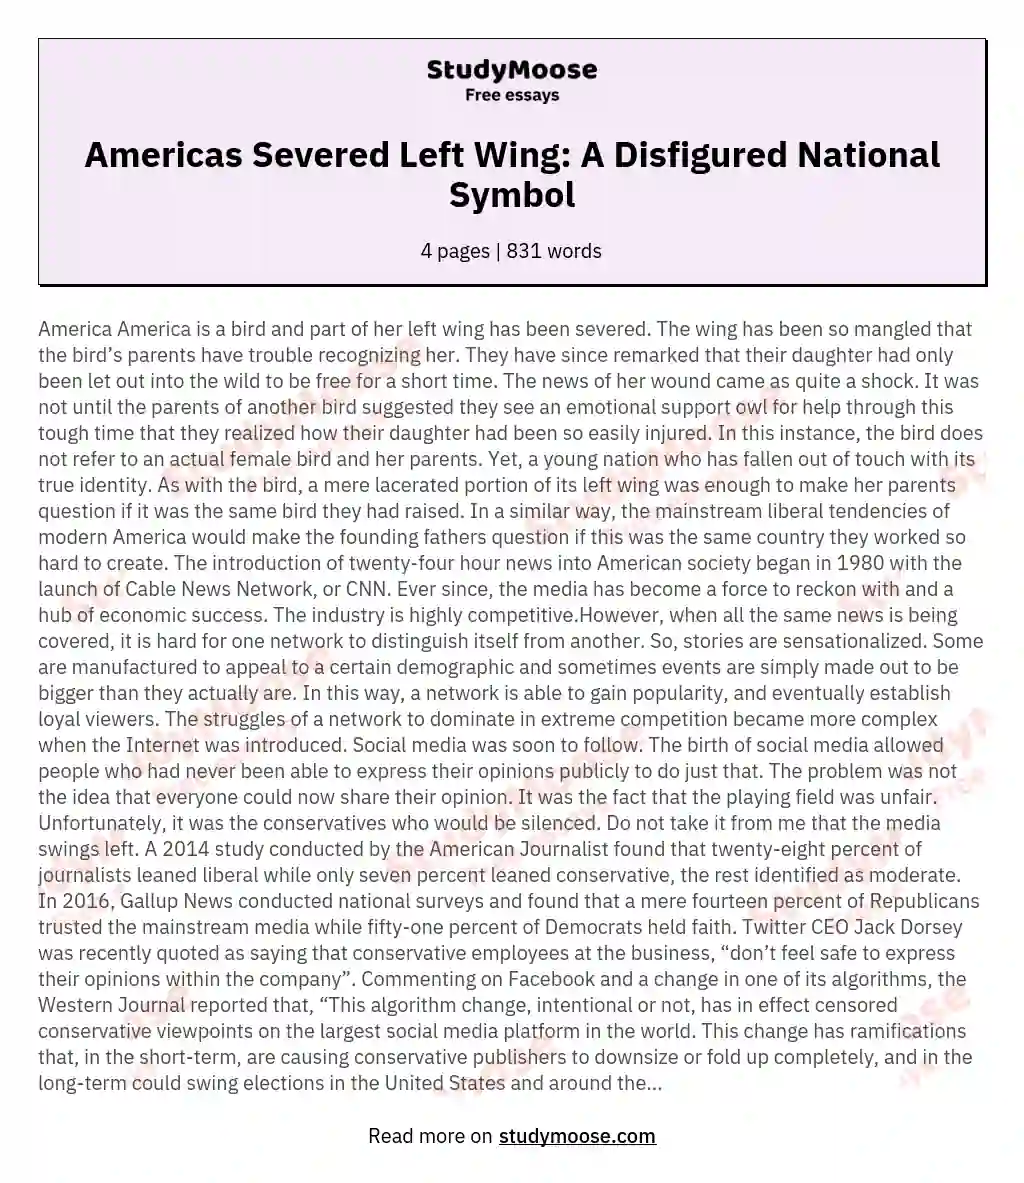 Americas Severed Left Wing: A Disfigured National Symbol essay